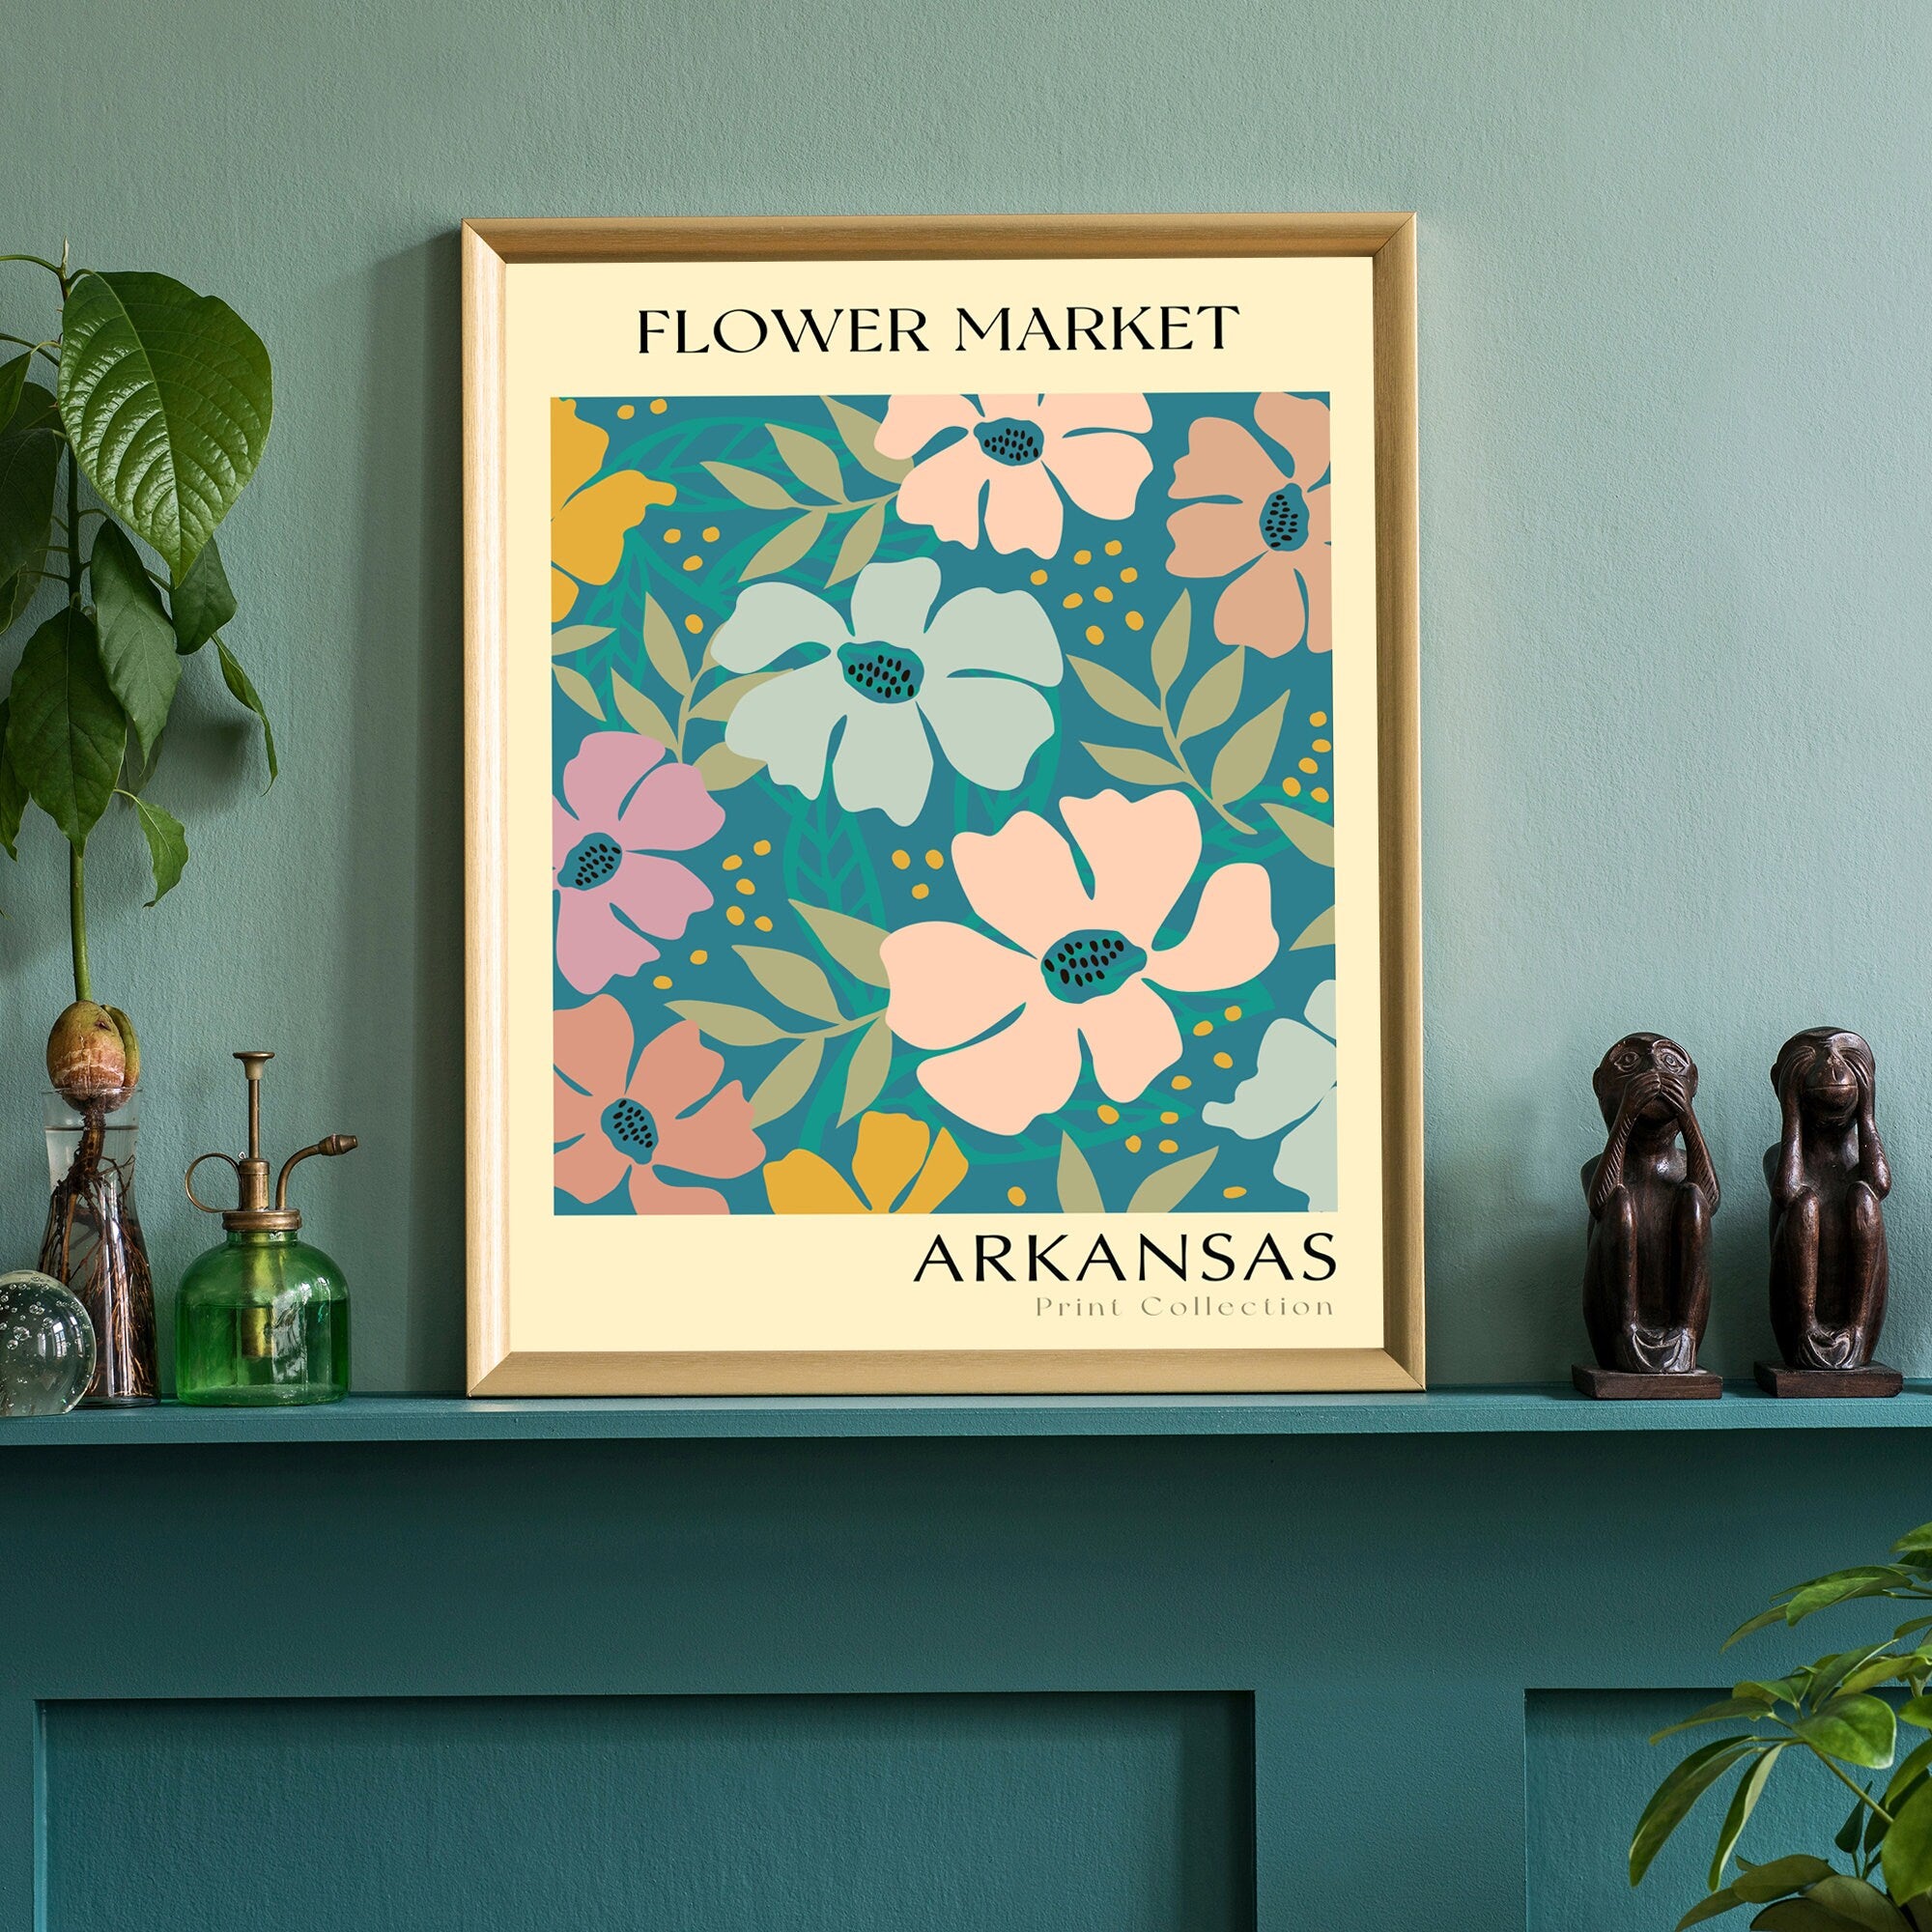 Arkansas State flower print, USA state poster, Arkansas flower market poster, Botanical poster, Natural poster artwork, Boho floral wall art